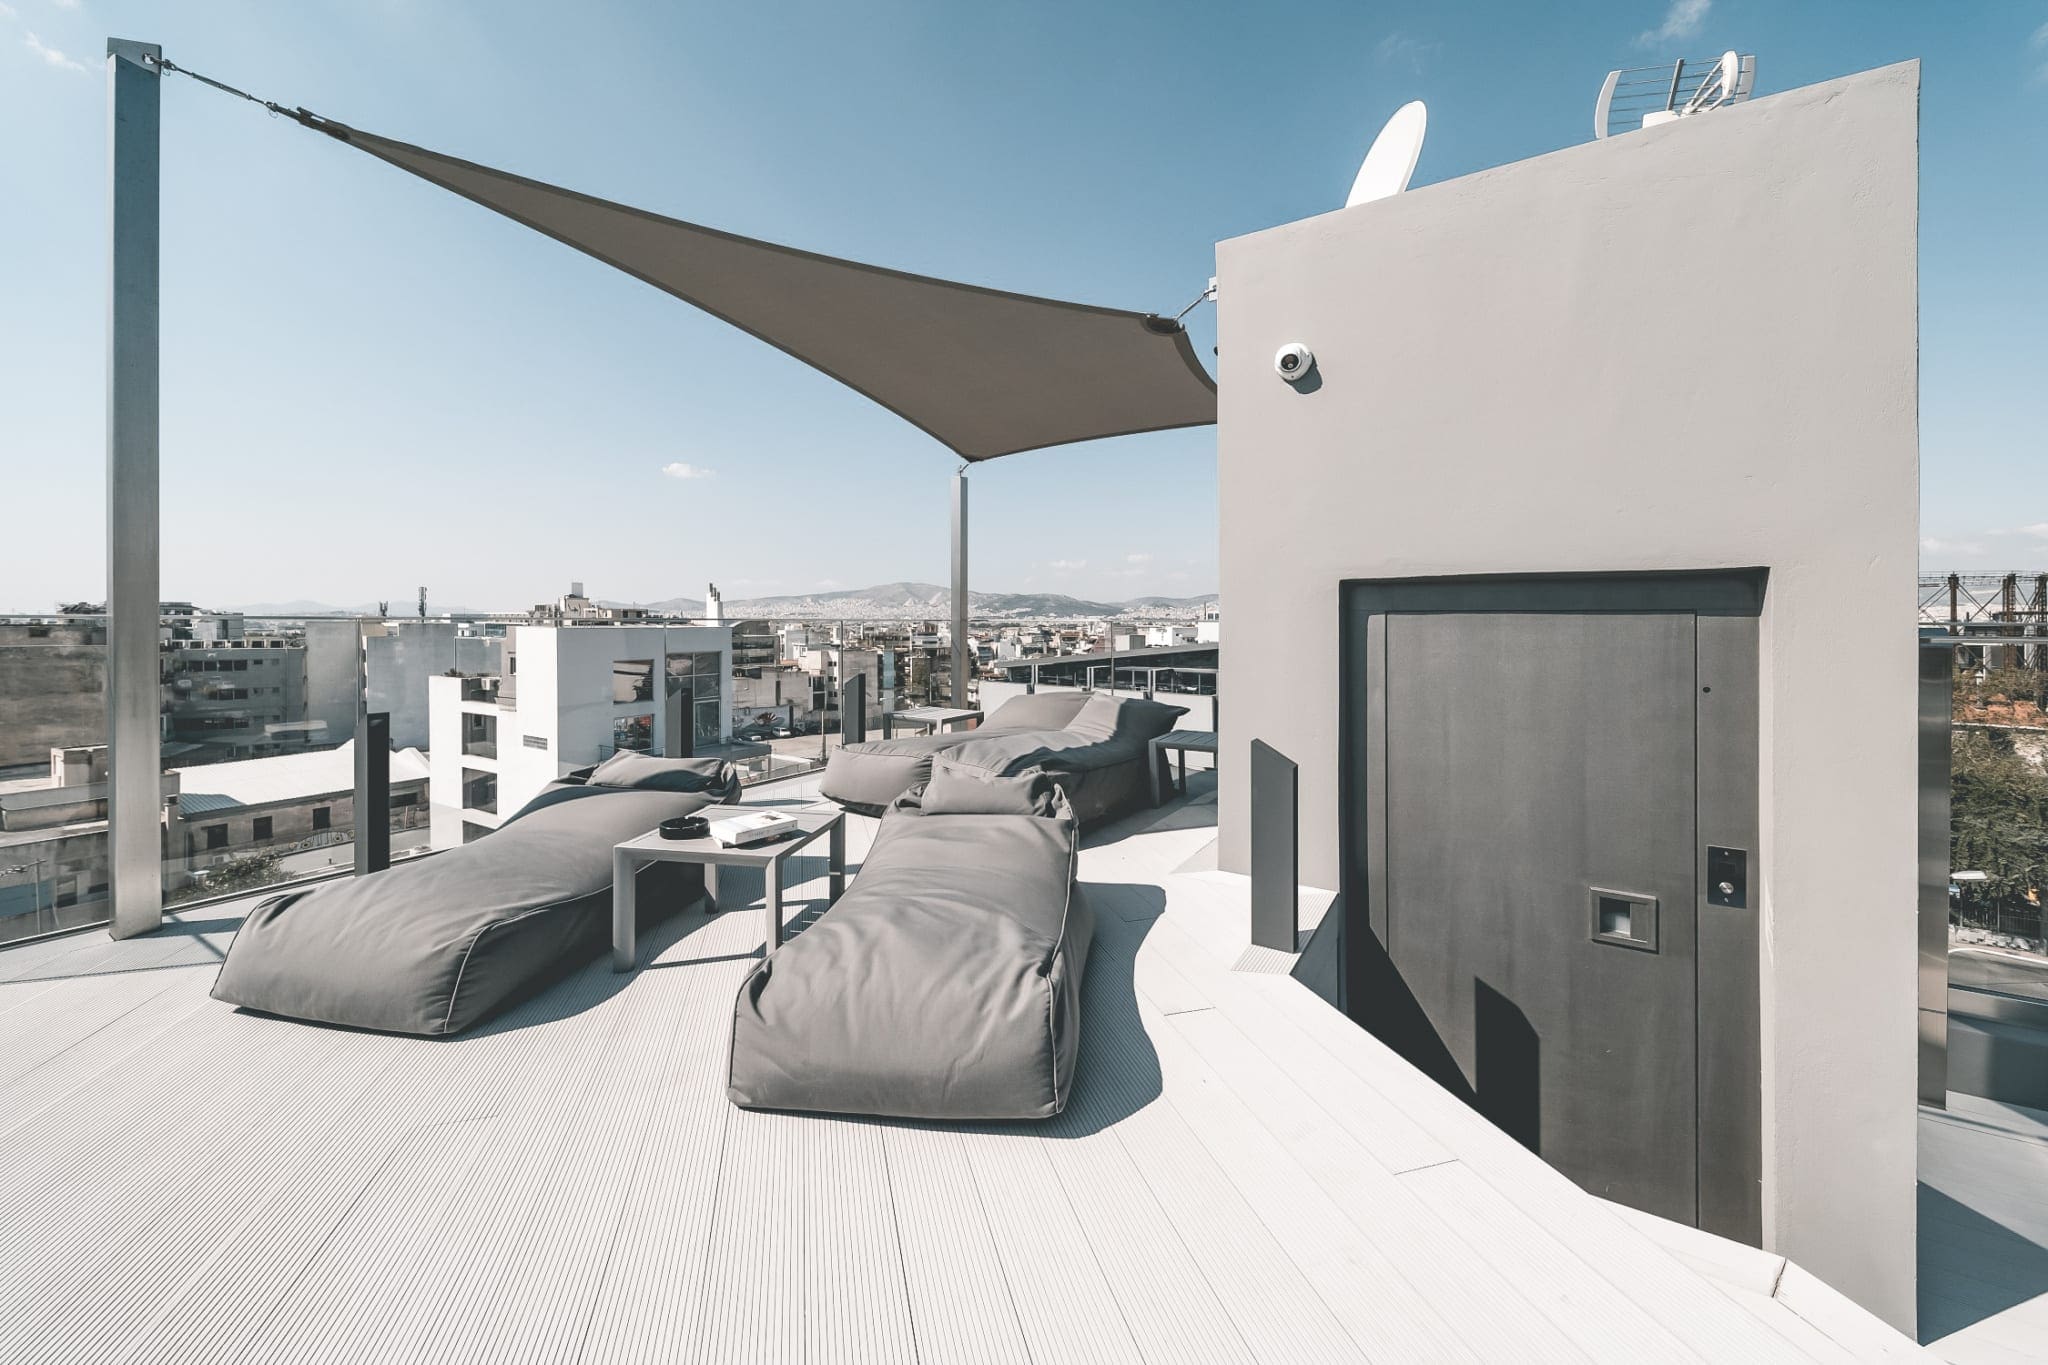 Airbnb met zwembad, Airbnb Finds: slapen in Athene met rooftop pool